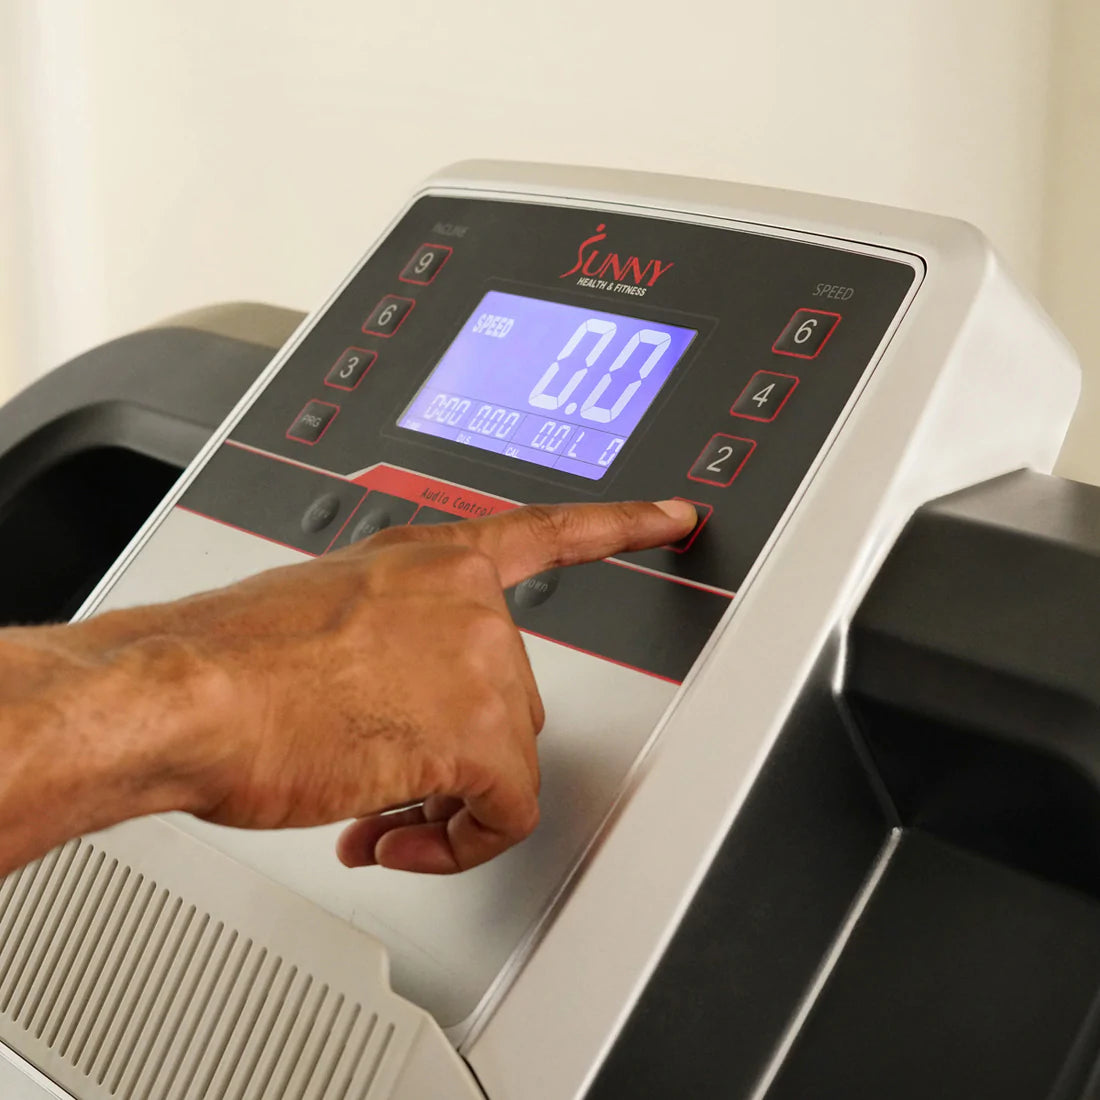 Sunny Health & Fitness Performance Treadmill SF-T7917